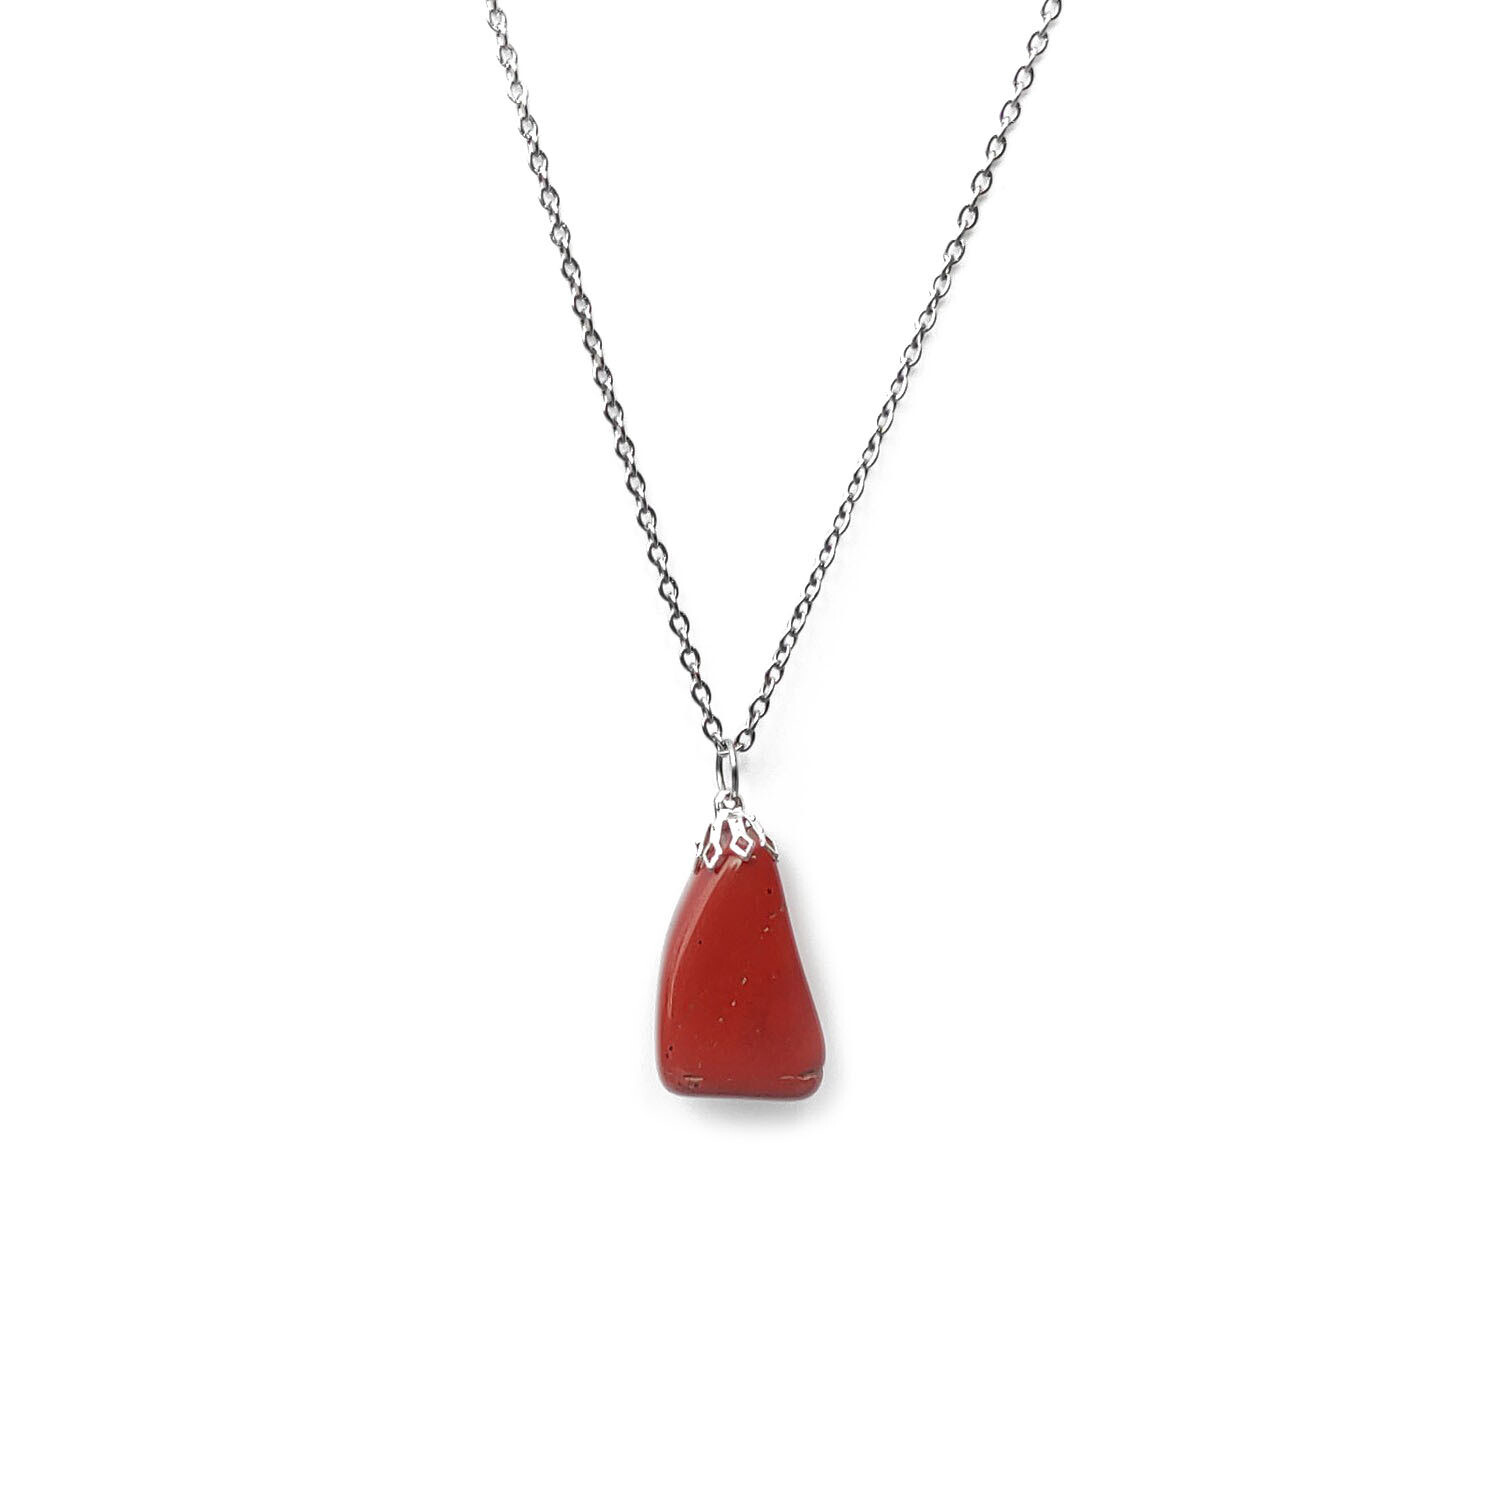 Red Jasper pendant gemstone necklace